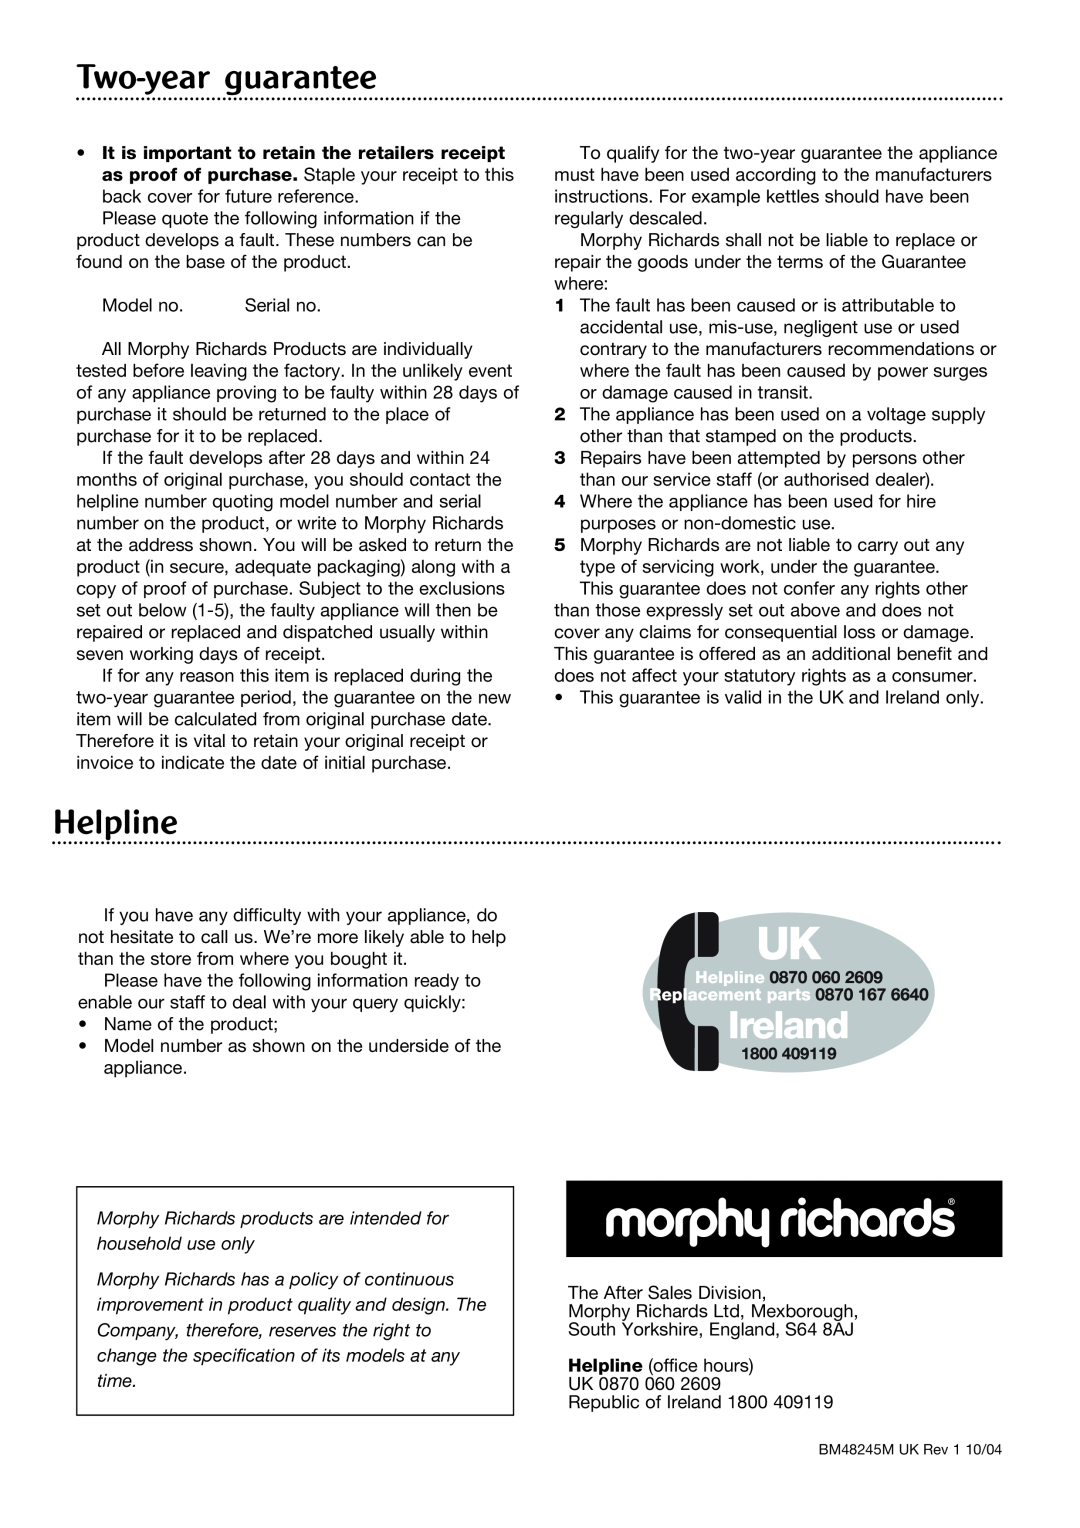 Morphy Richards Compact breadmaker manual Two-yearguarantee, Helpline 